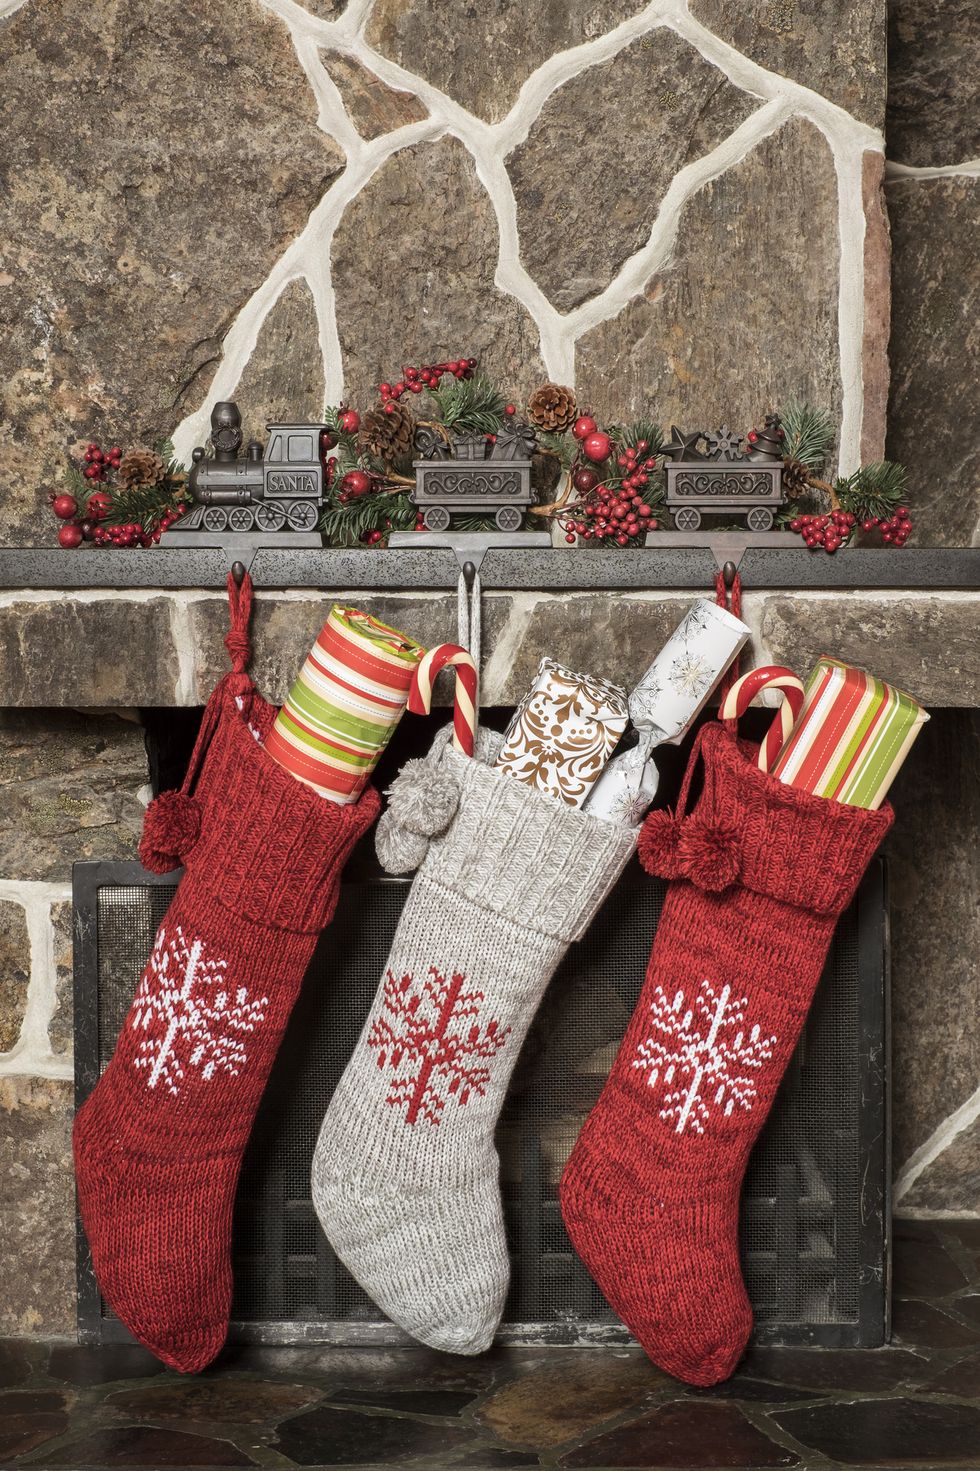 christmas-stockings-royalty-free-image-488769494-1541697986.jpg